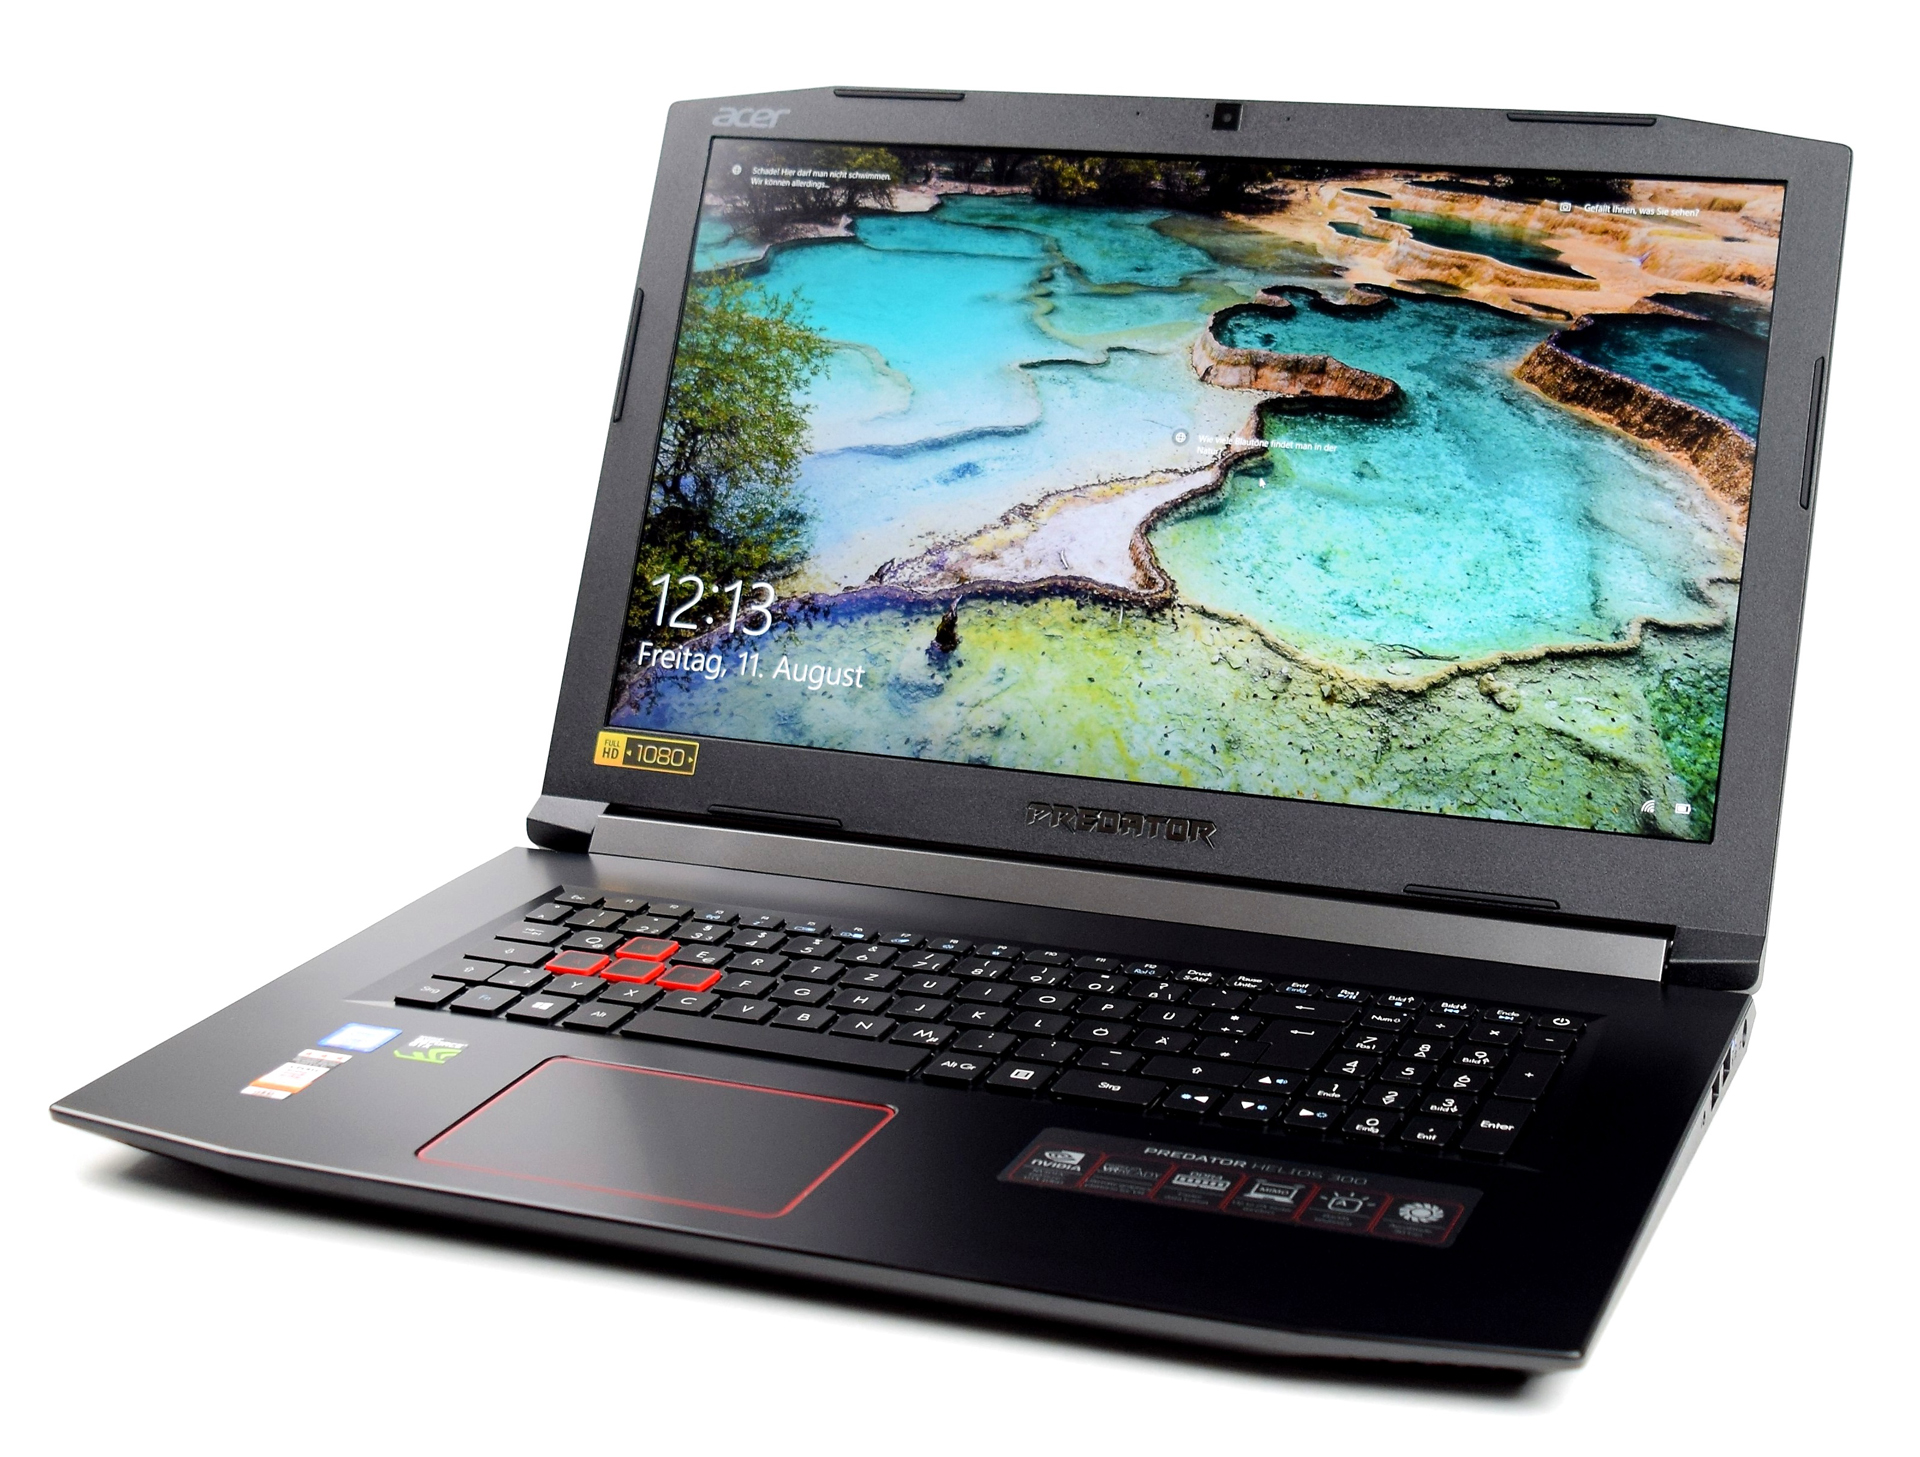 Acer Predator Helios 300 (7700HQ, GTX 1060, Full HD) Laptop Review 